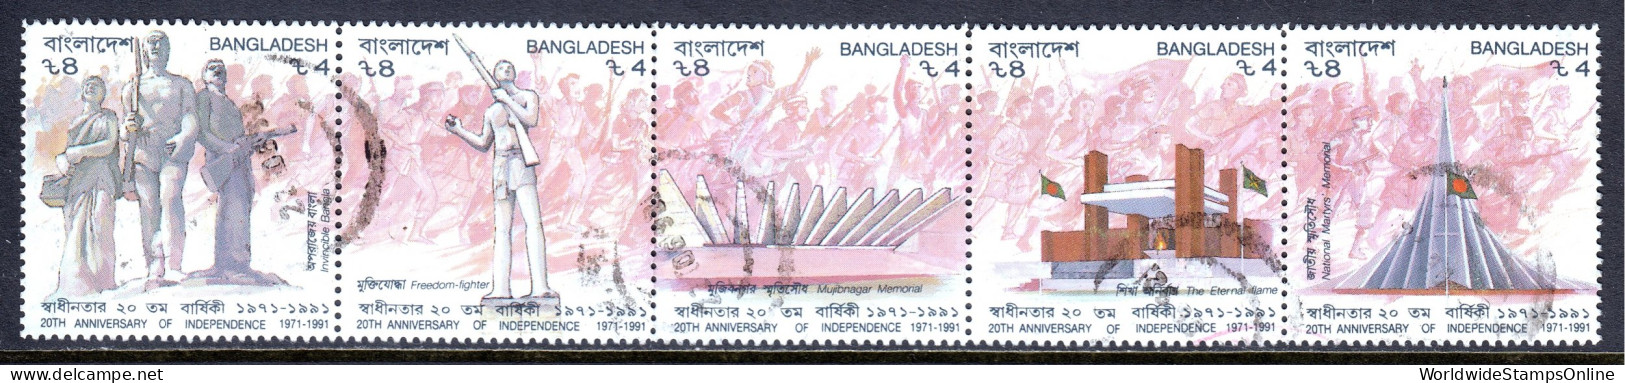 Bangladesh - Scott #387 - Used - 2 Perf Folds, Crease On Right Stamp - SCV $8.00 - Bangladesh